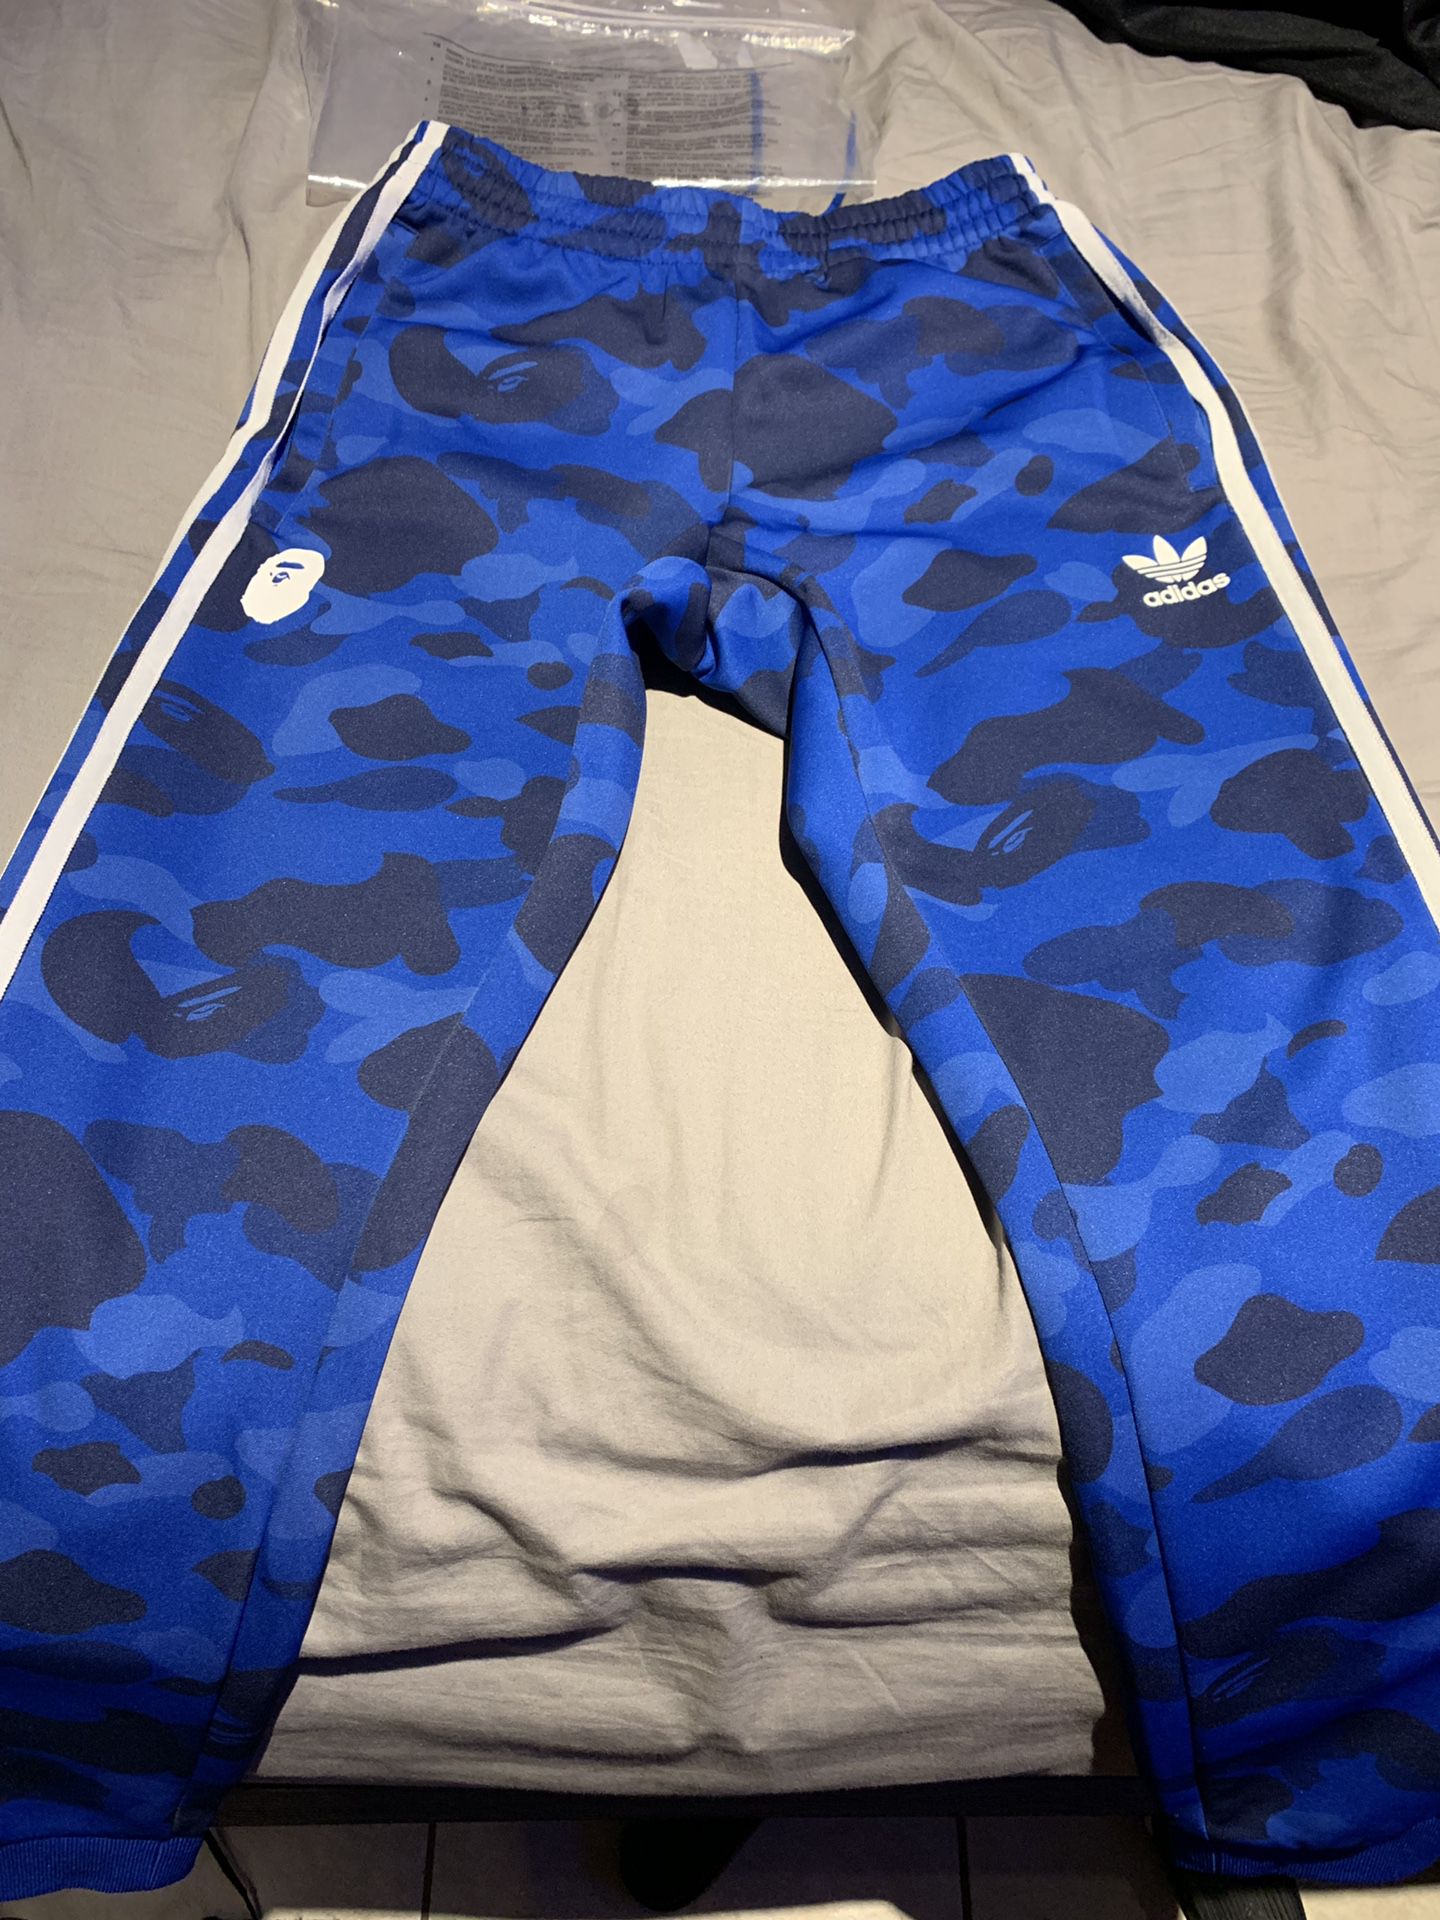 Adidas Bape track pants in Huntington Park, CA OfferUp